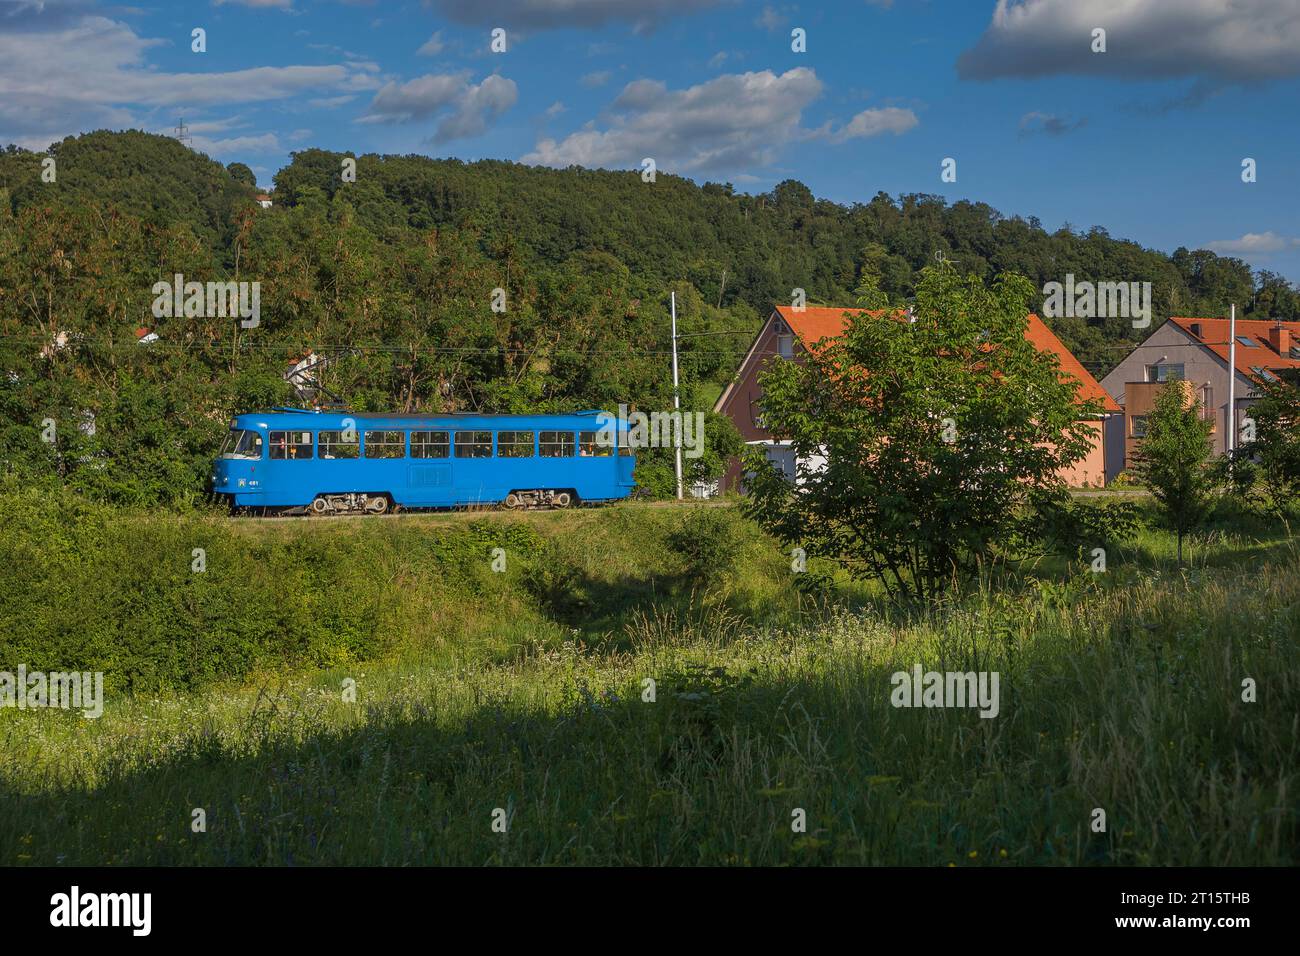 19.07.2020. Croatia, Zagreb, Gracansko Dolje. Tatra on the northern part of Zagrebian tram network. Stock Photo